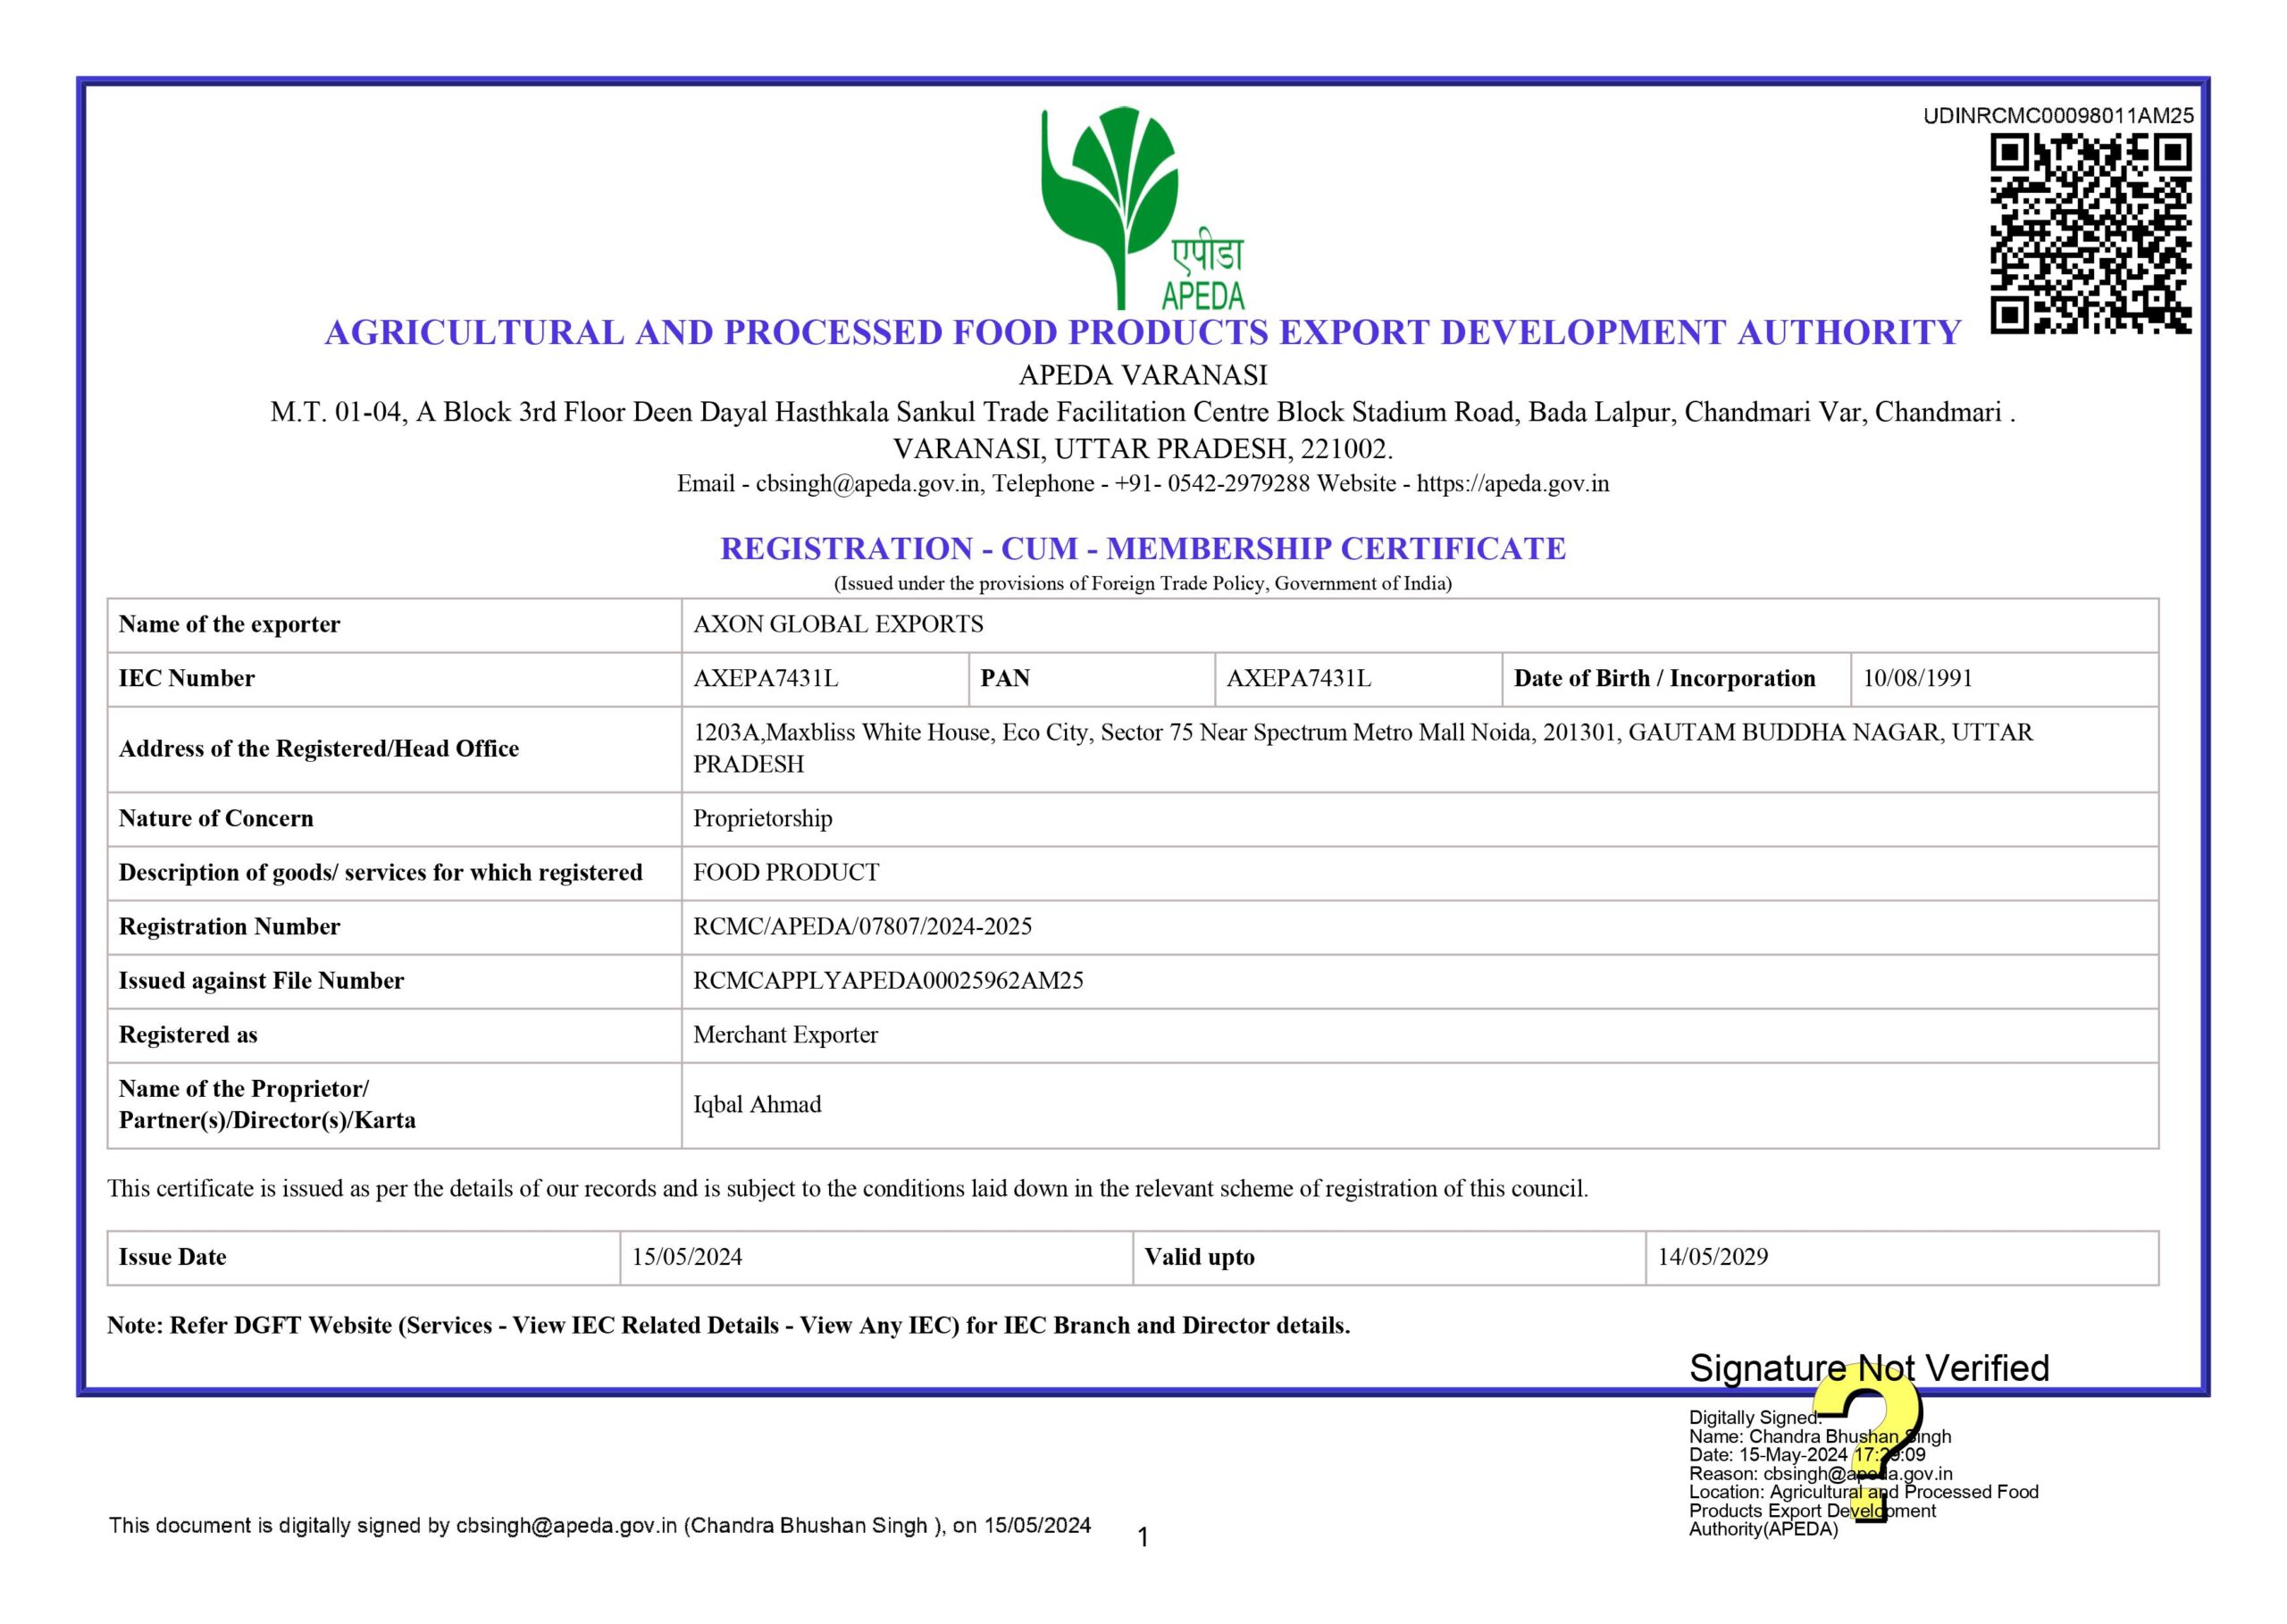 RCMC APEDA Certificate